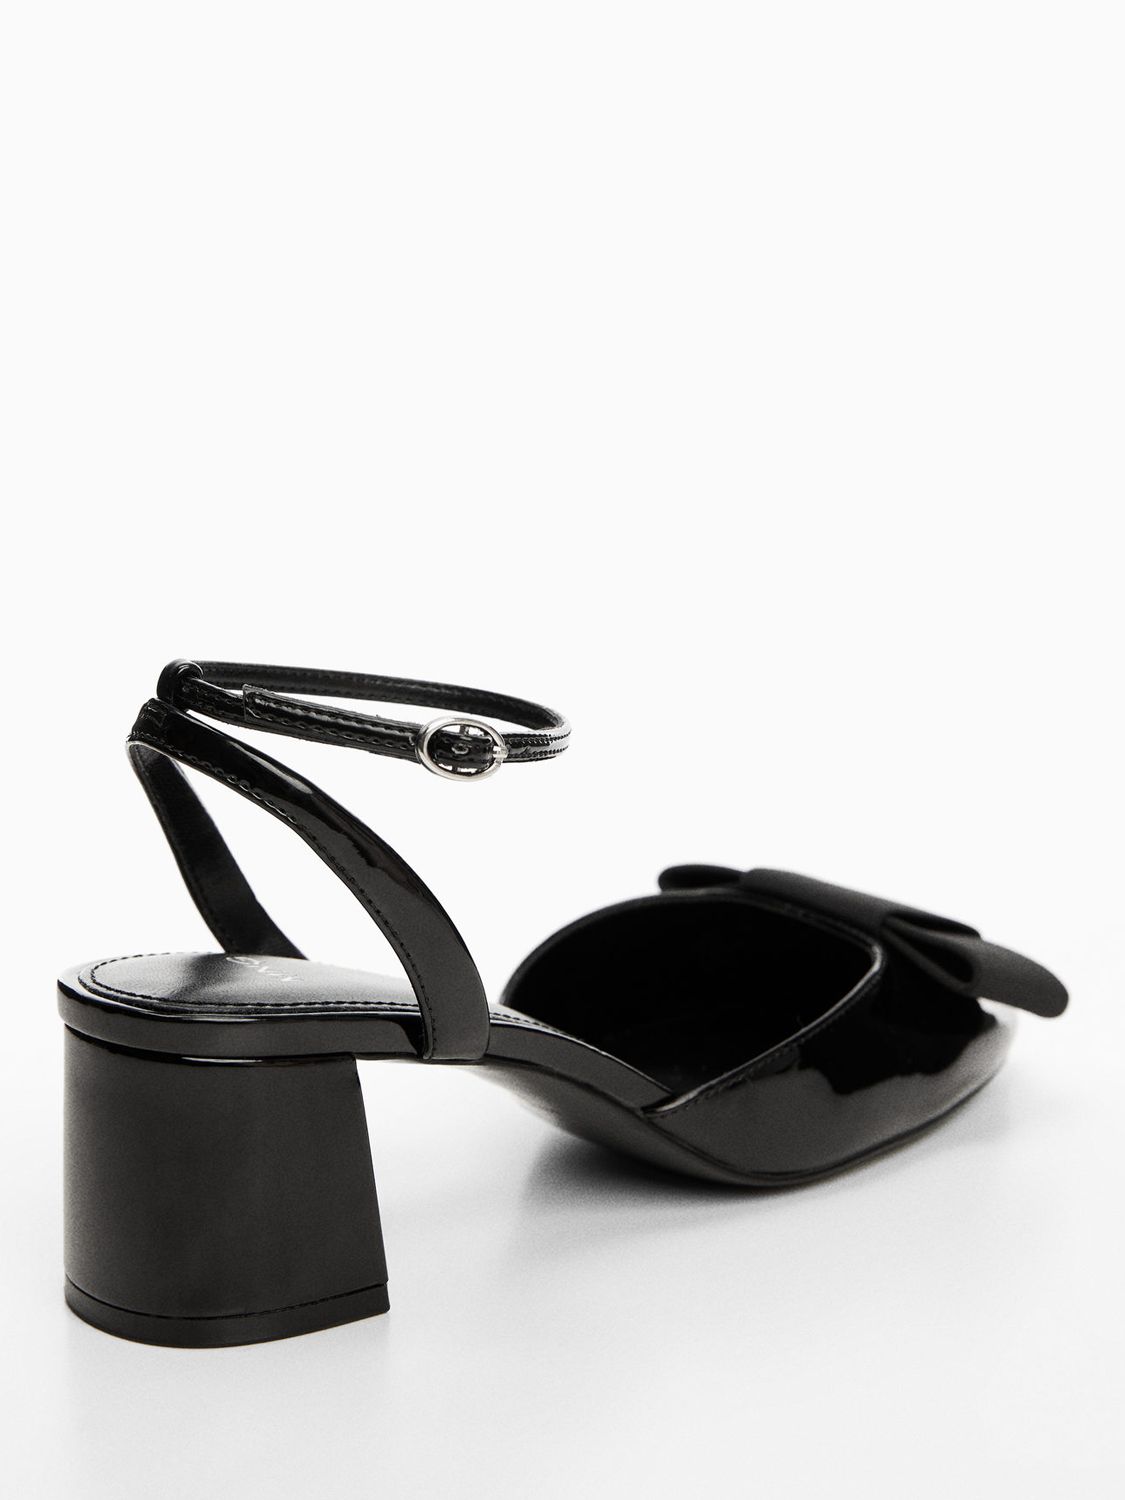 Mango Megan Patent Bow Shoes, Black at John Lewis & Partners